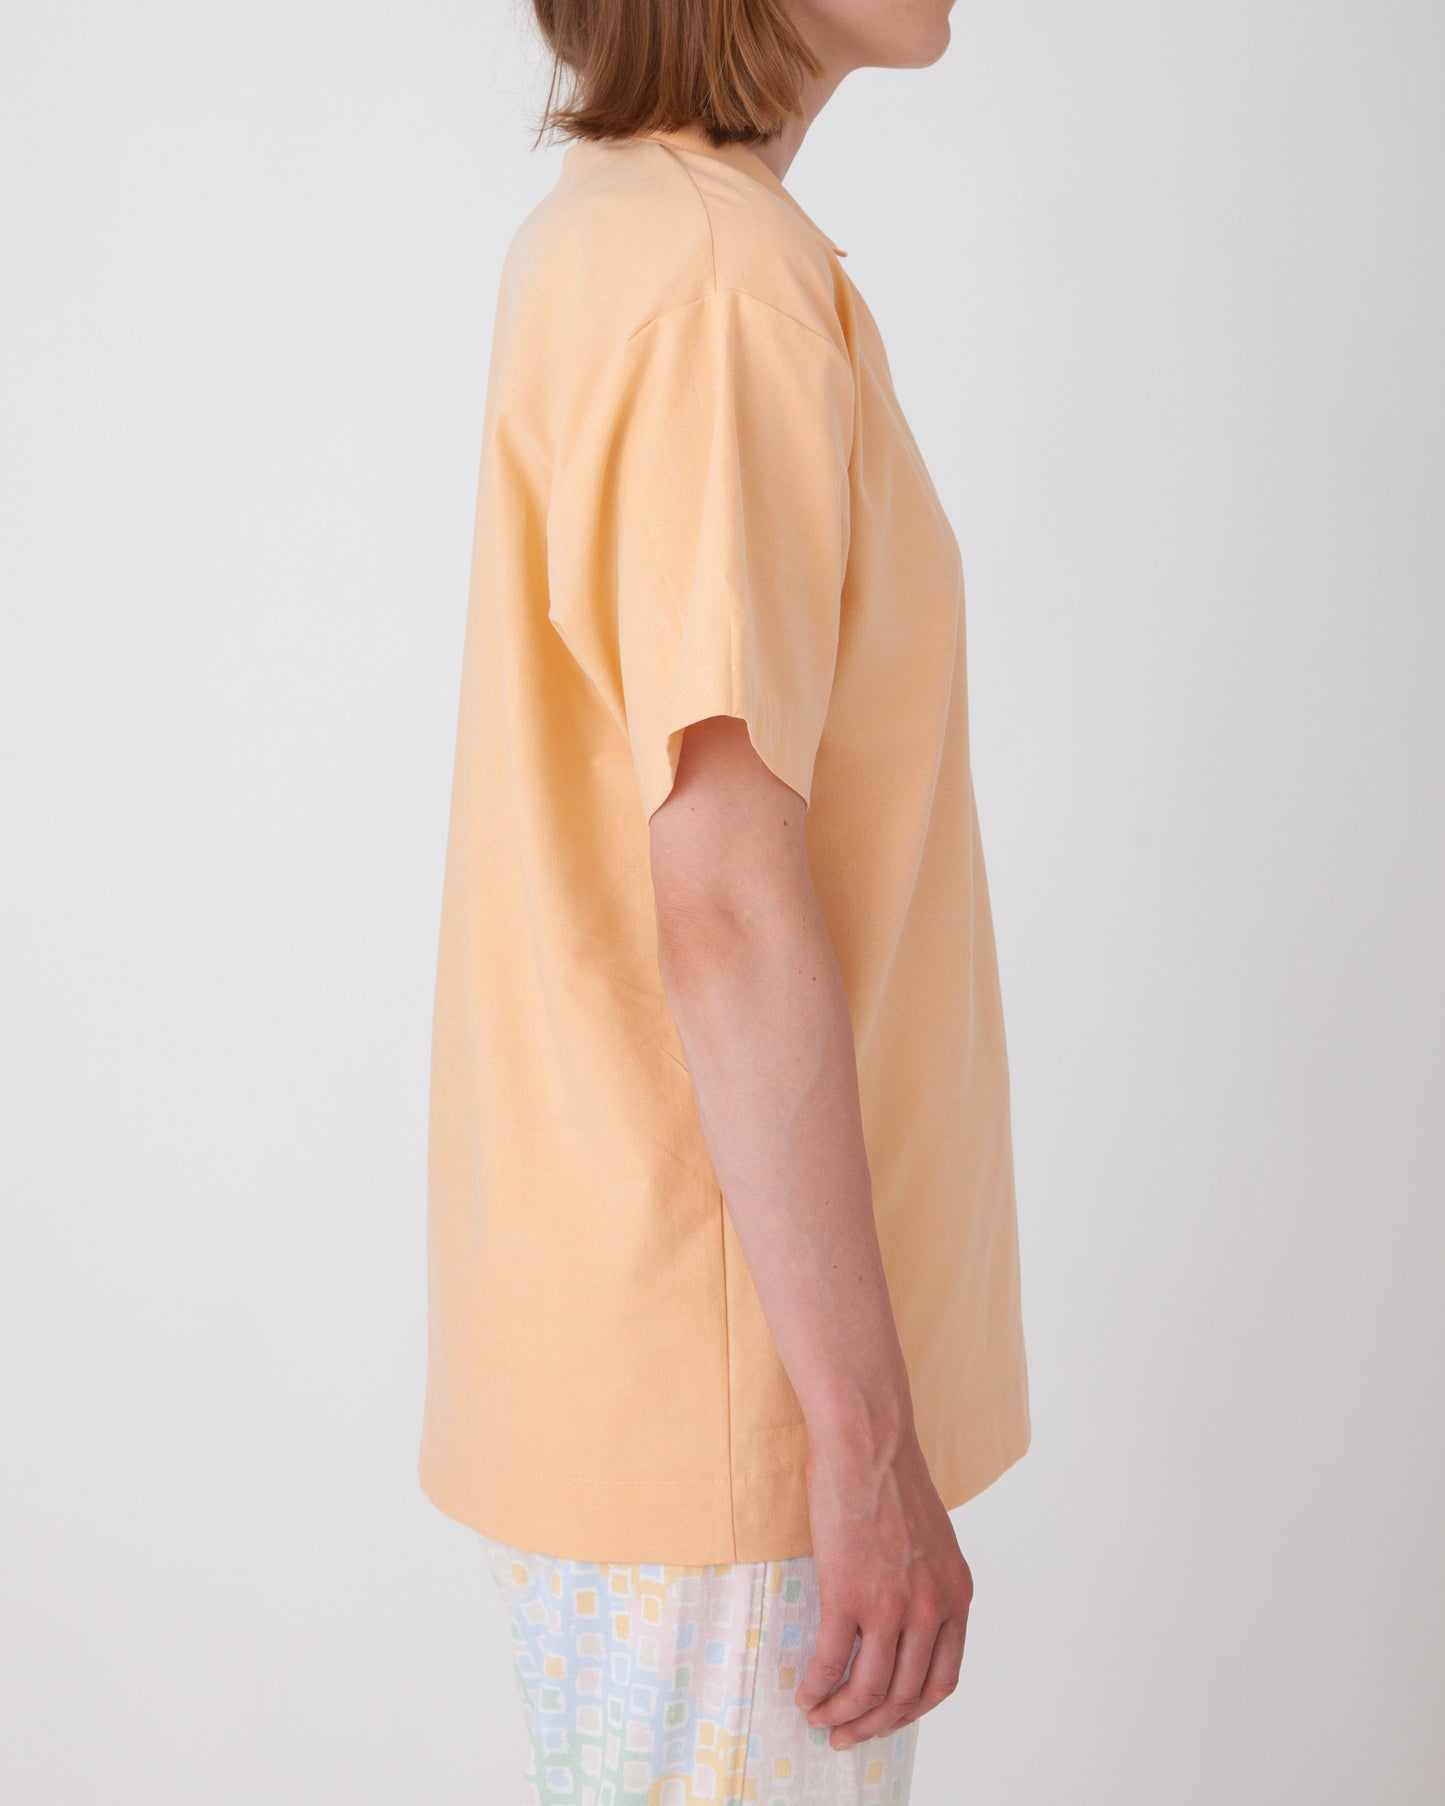 Unisex Bed Linen Polo Shirt